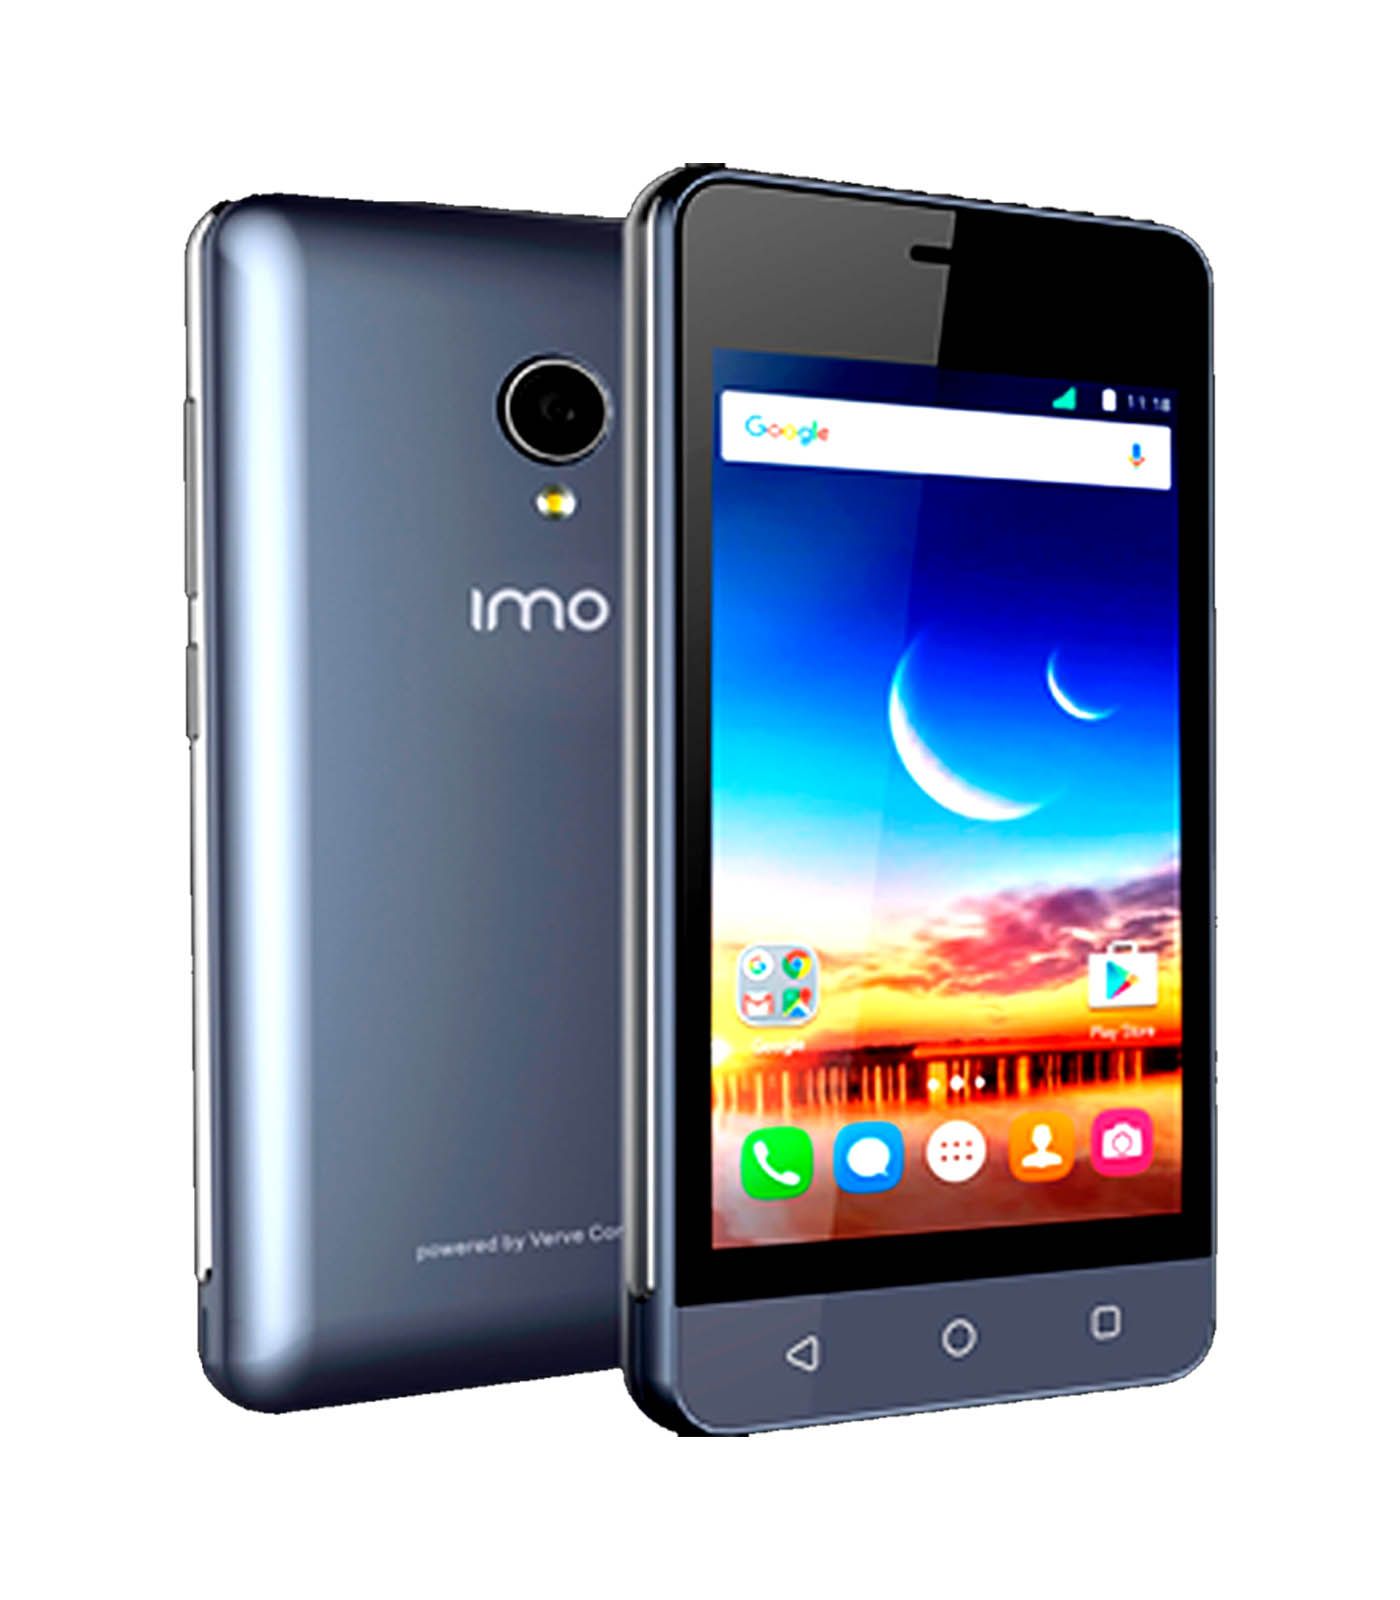 IMO Q Smartphone